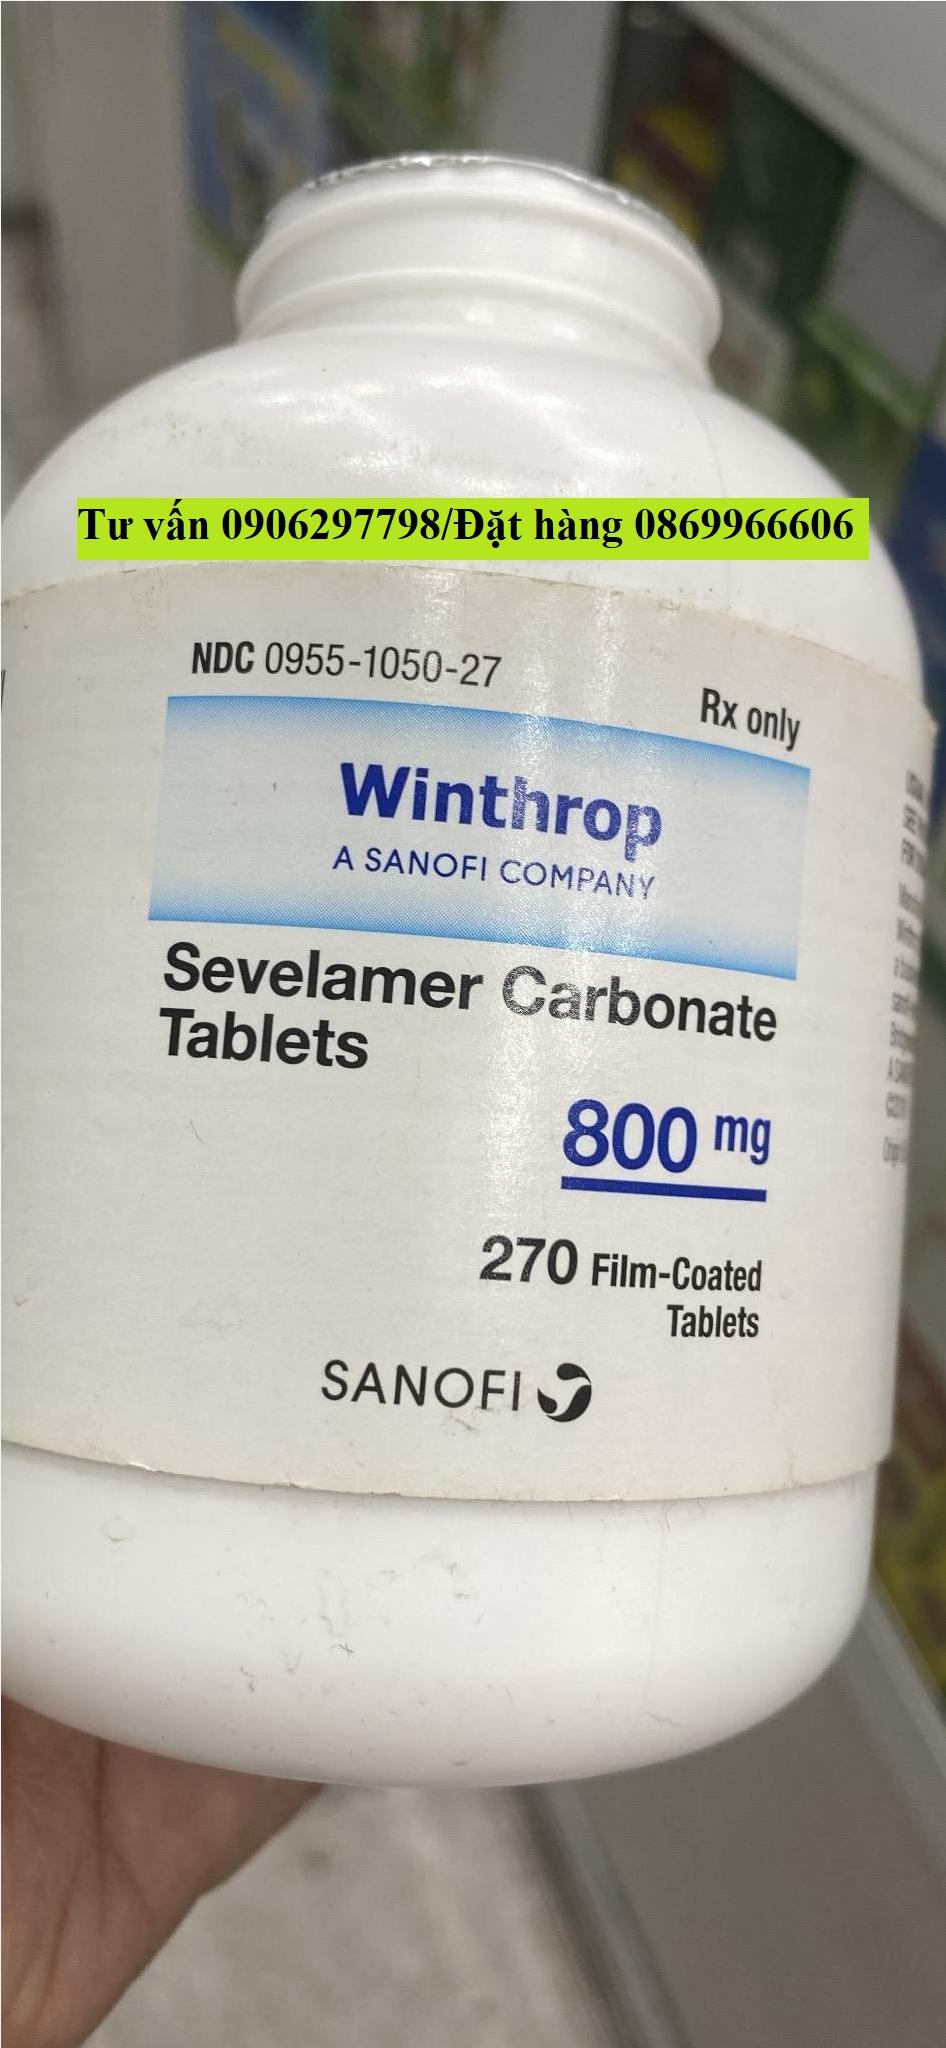 Thuốc Winthrop Sevelamer giá bao nhiêu mua ở đâu?